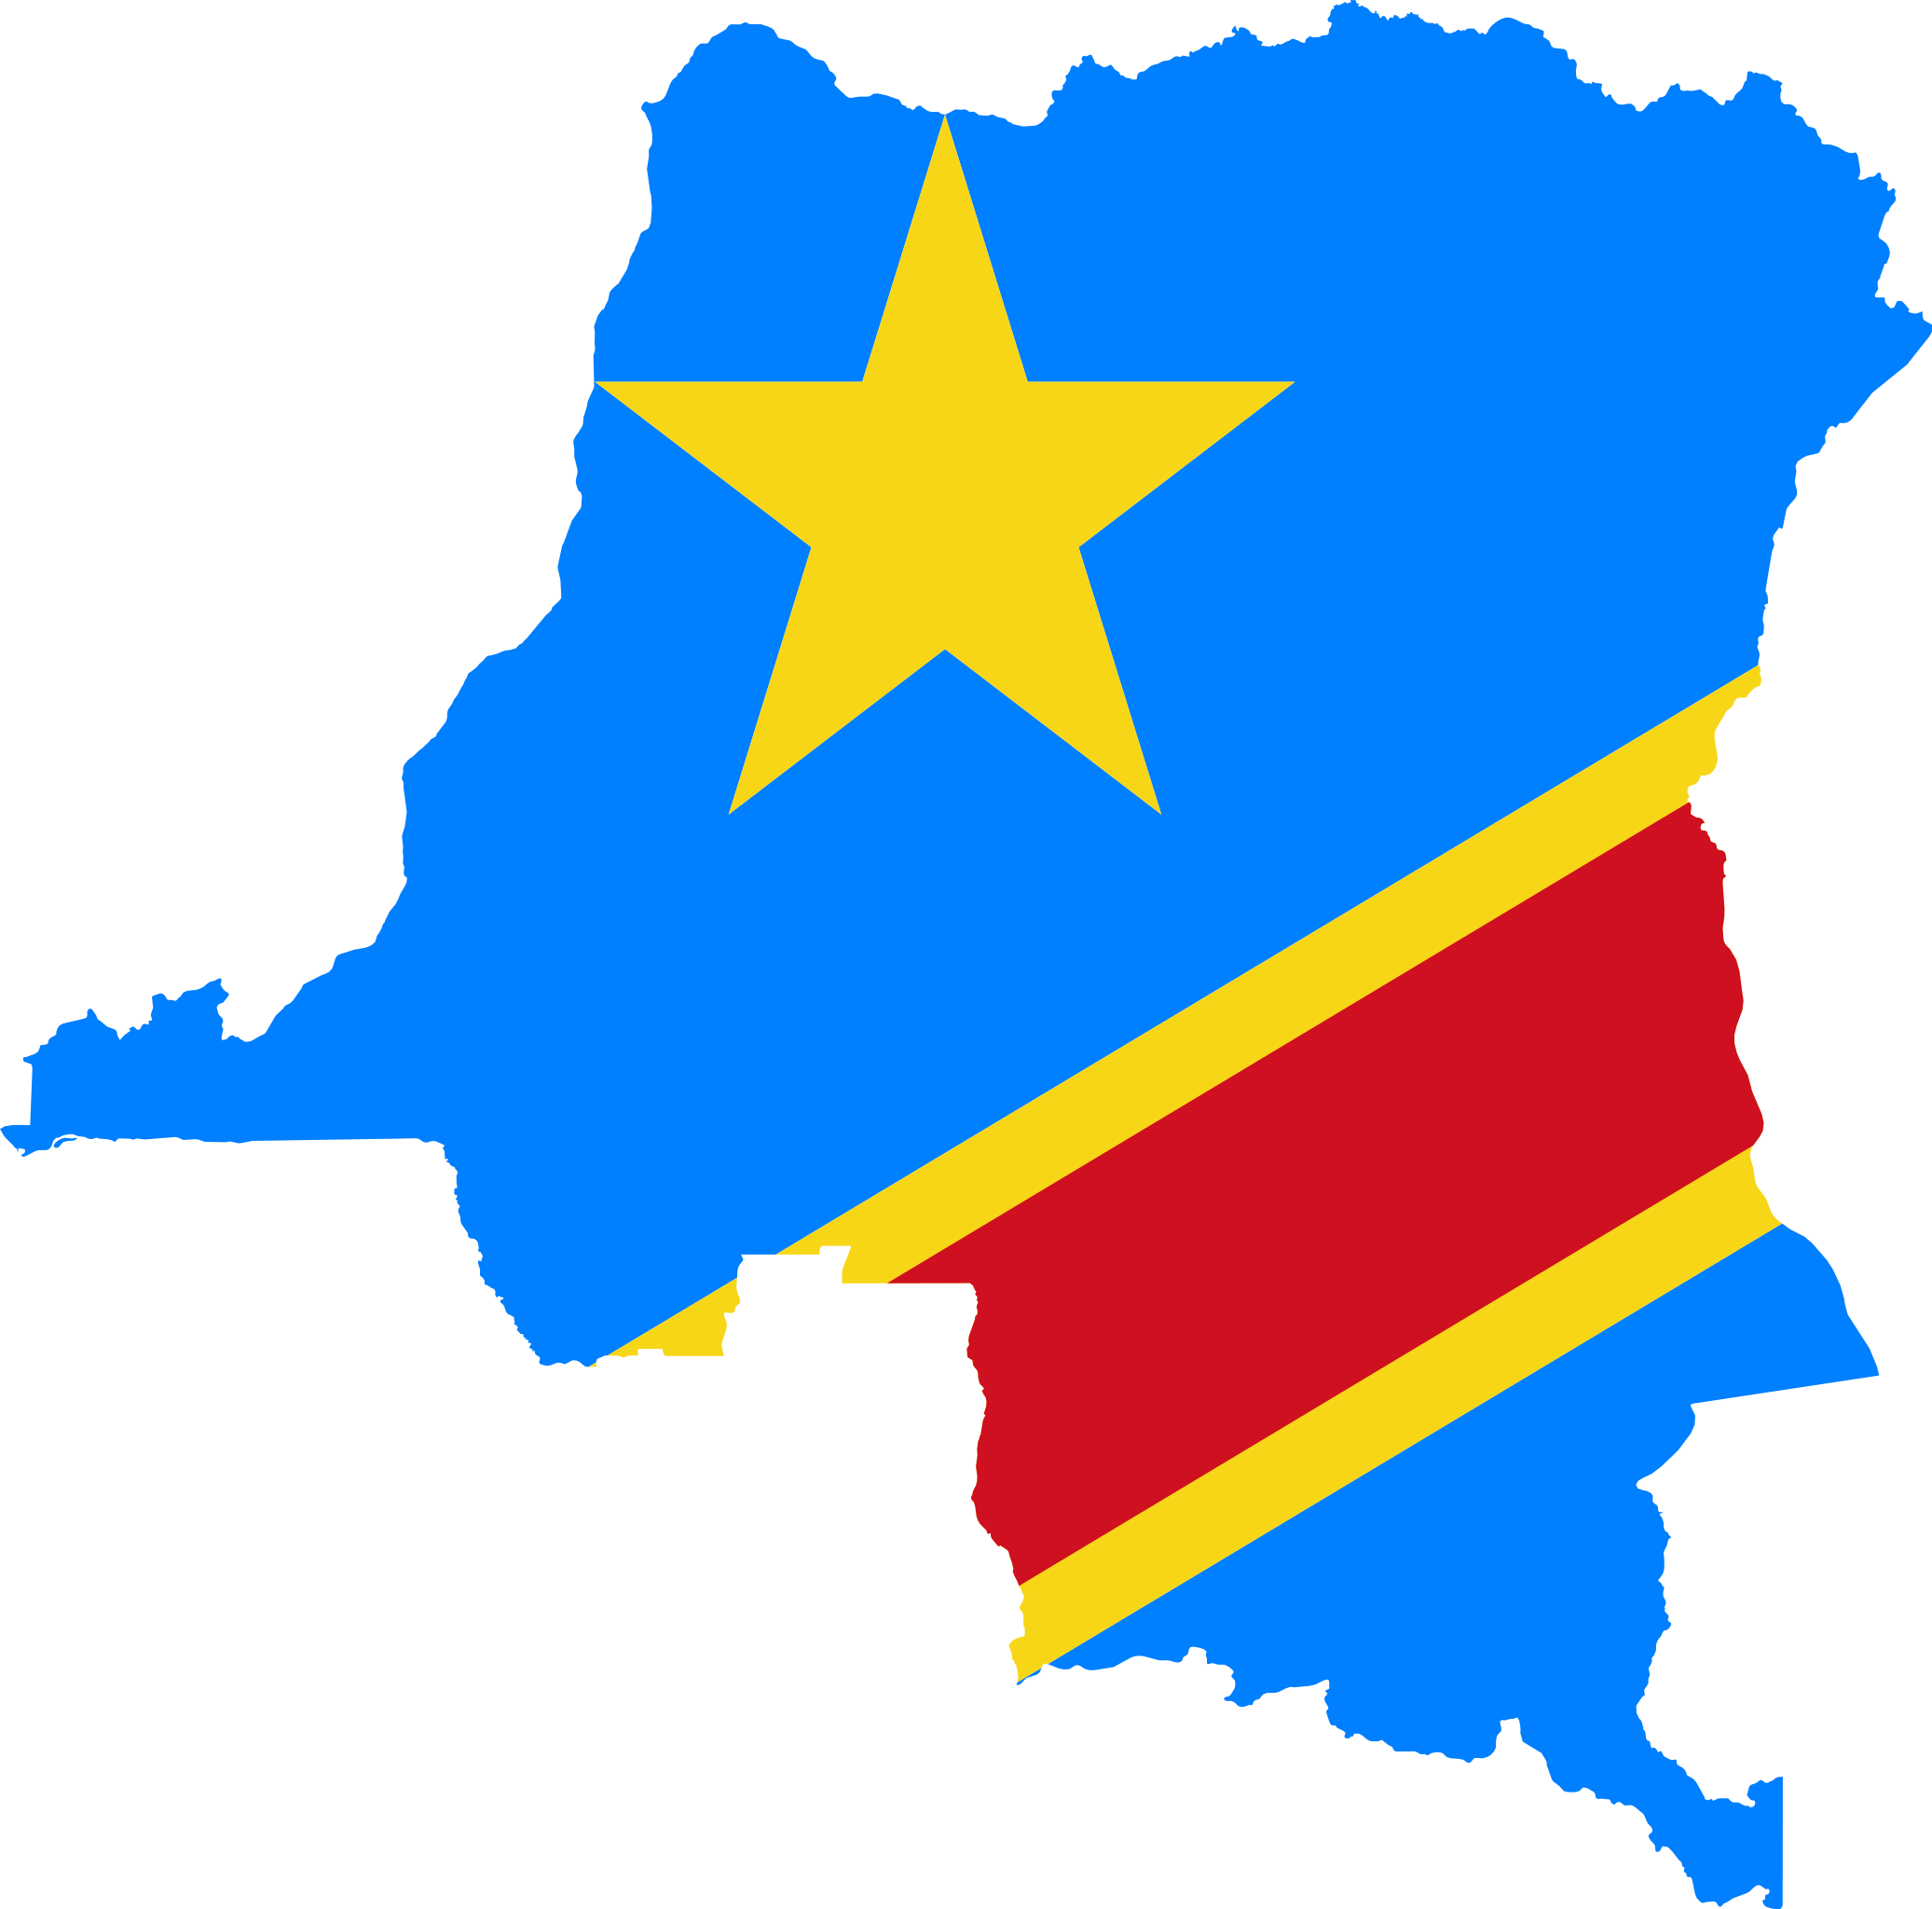 Democratic Republicof Congo Mapand Flag